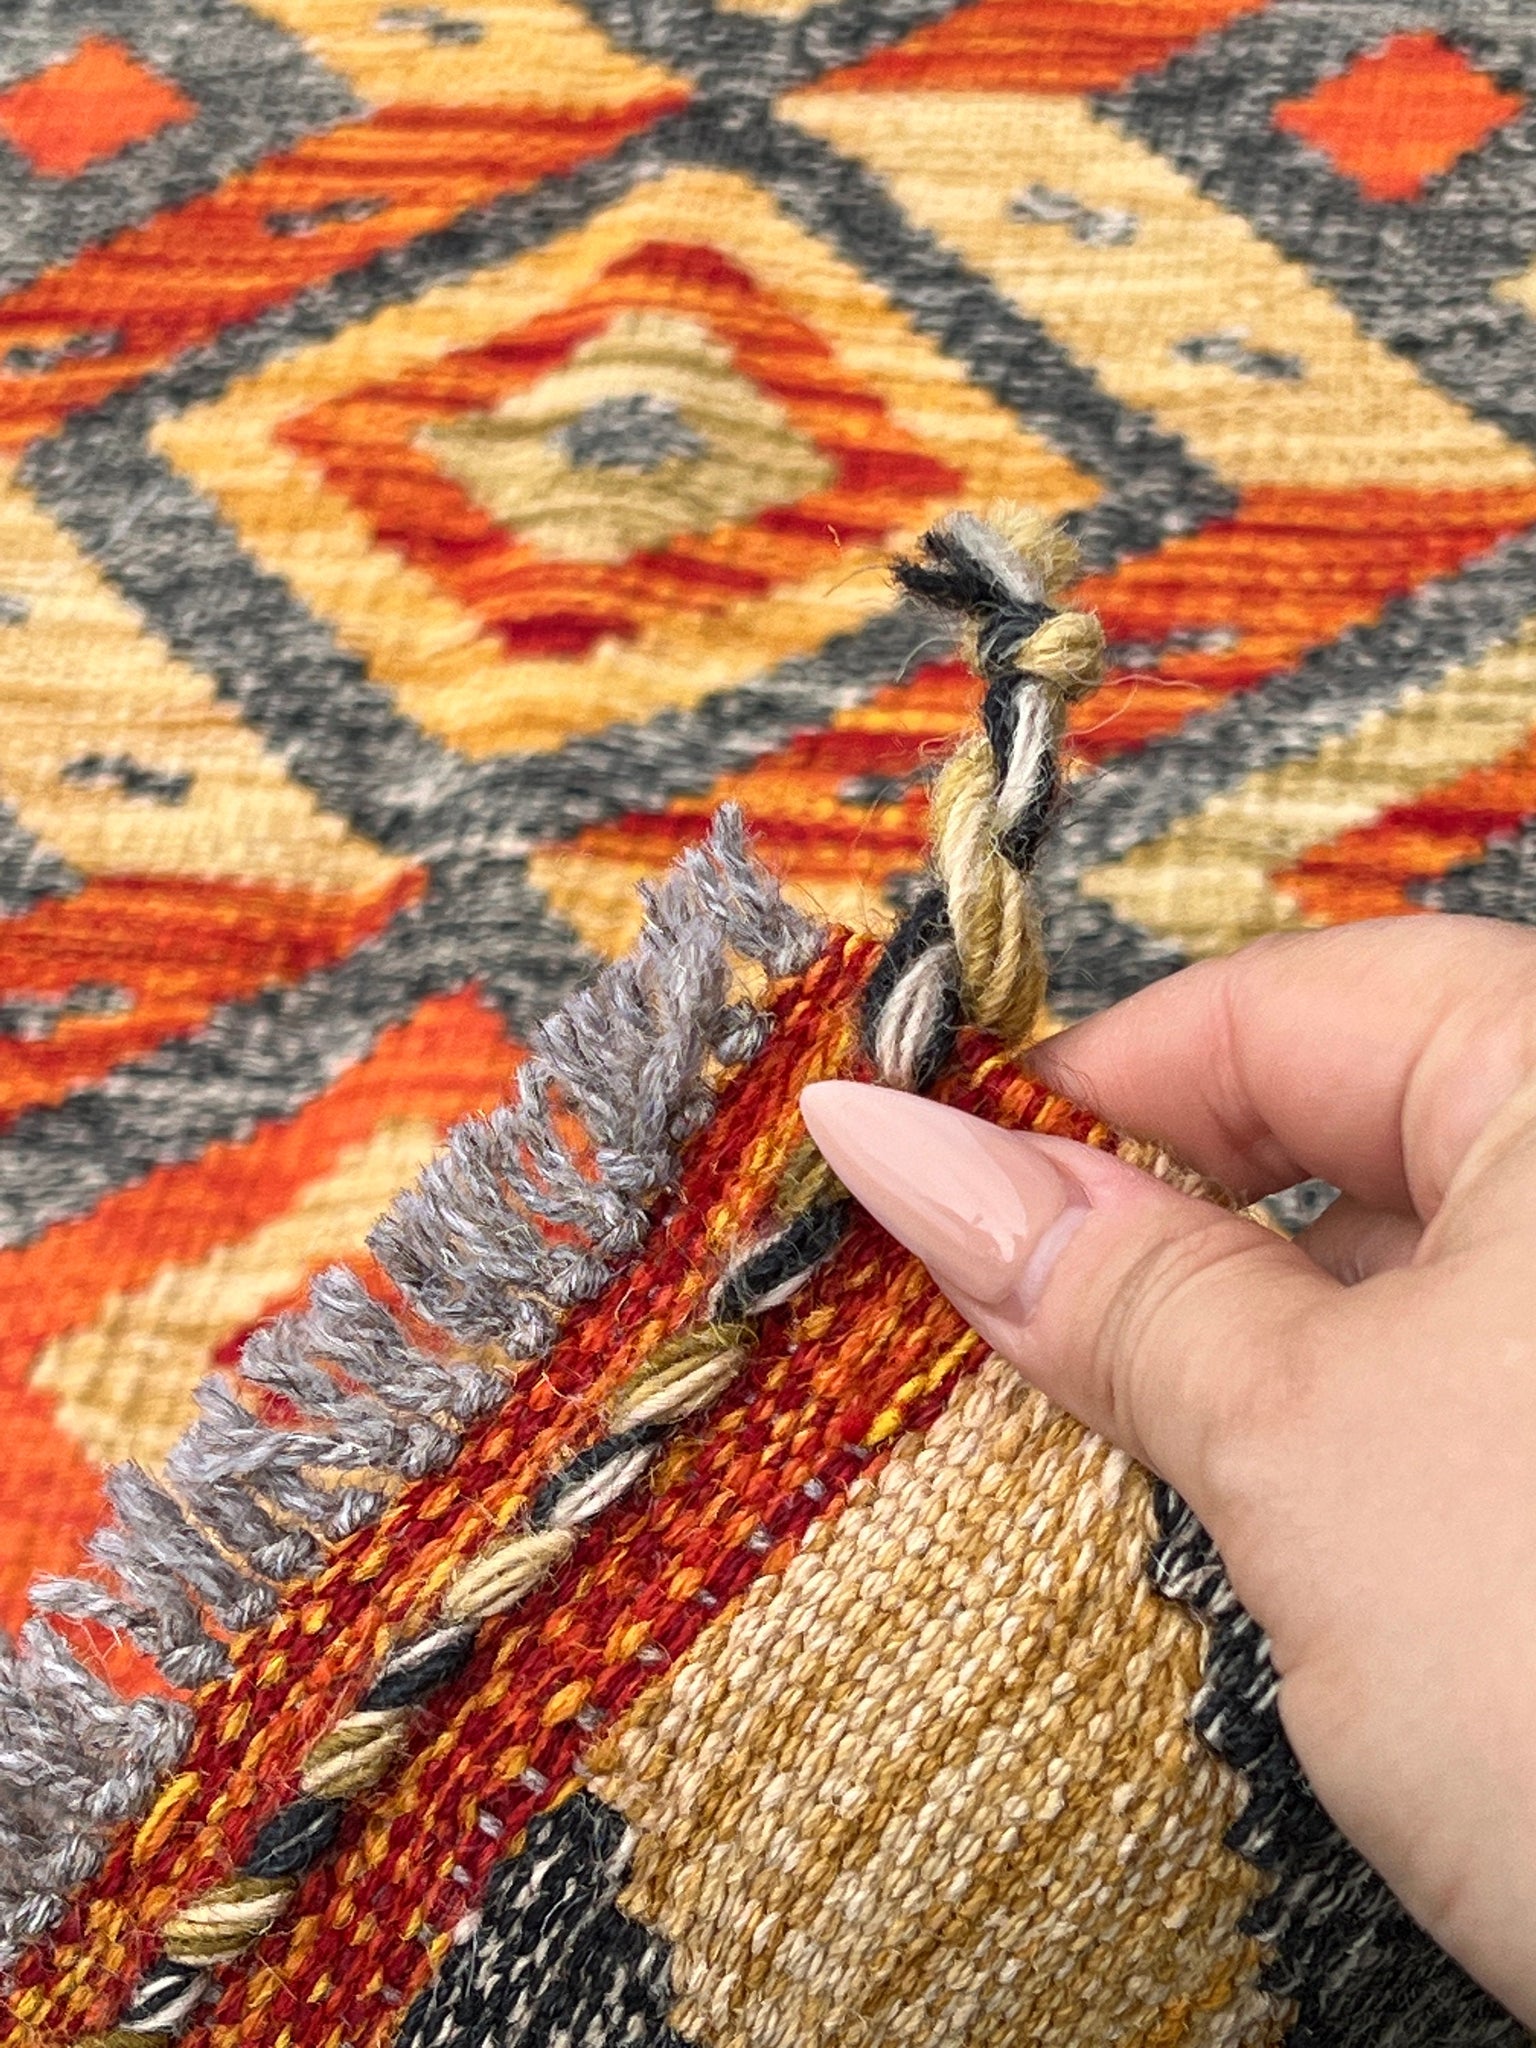 3x4 Handmade Afghan Kilim Rug | Grey Blood Orange Saffron Yellow | Hand Knotted Wool Flatweave Flat Woven Striped Tribal Outdoor Patio